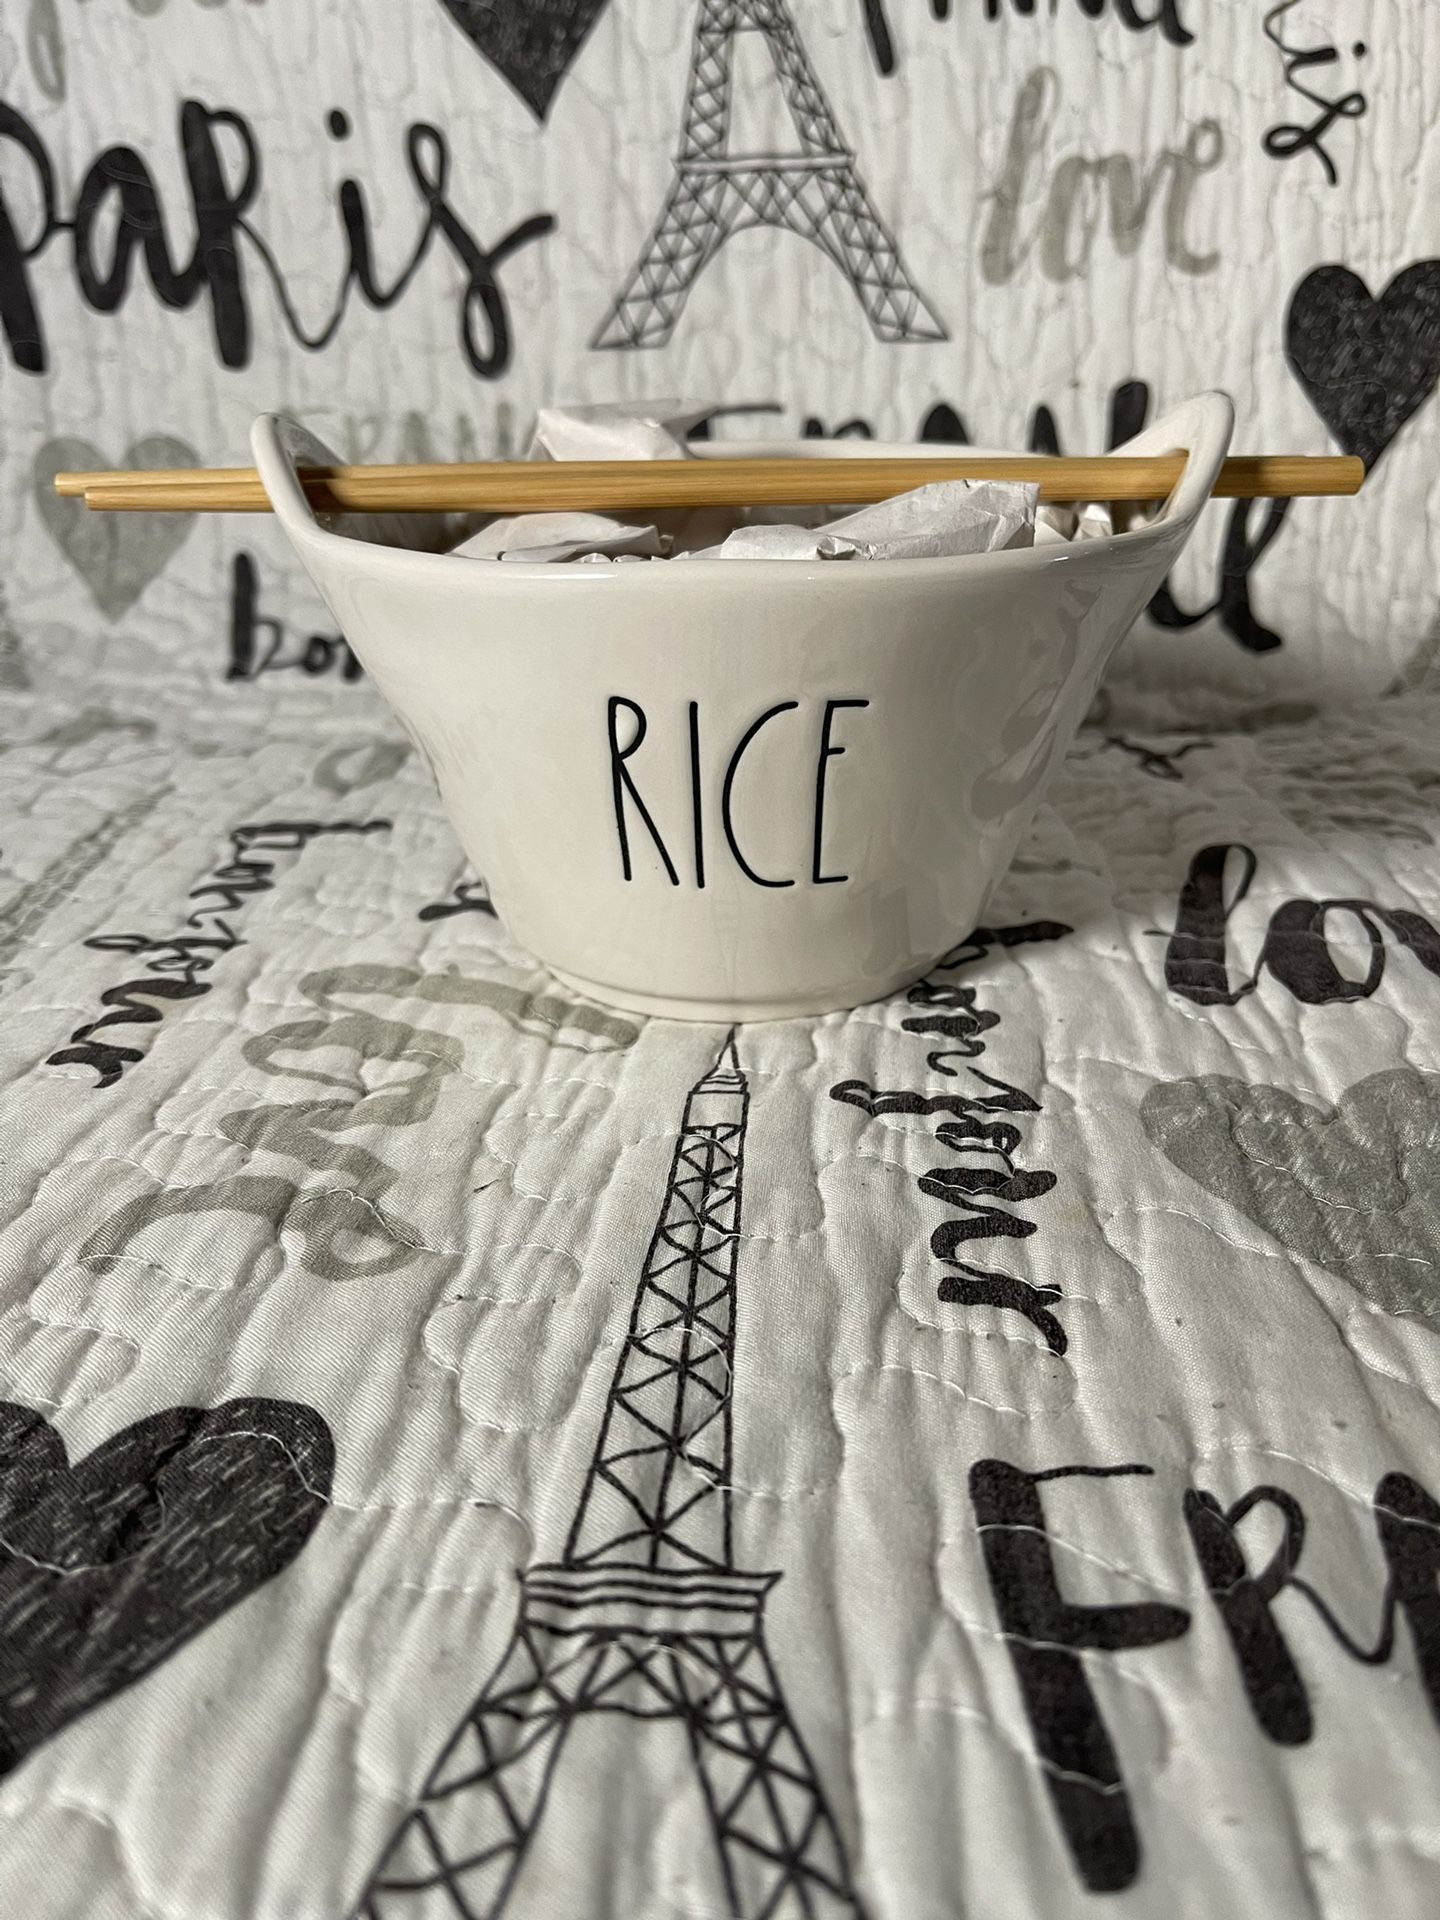 #143 Rae Dunn "RICE" Ramen Bowl Chopsticks Noodle Bowl